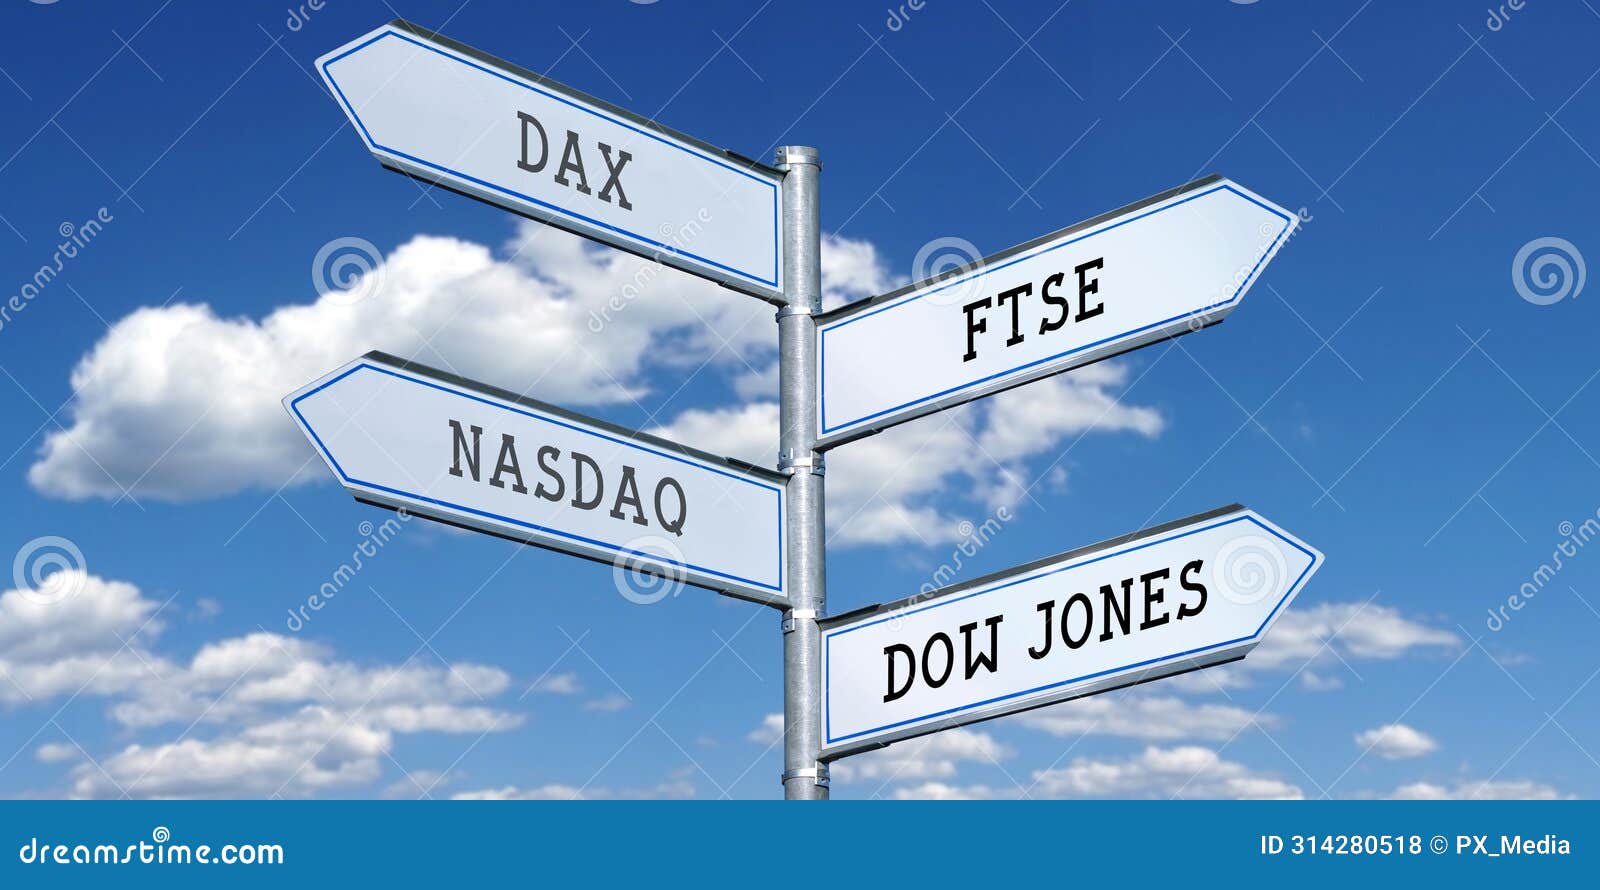 dax, ftse, nasdaq, dow jones - metal signpost with four arrows